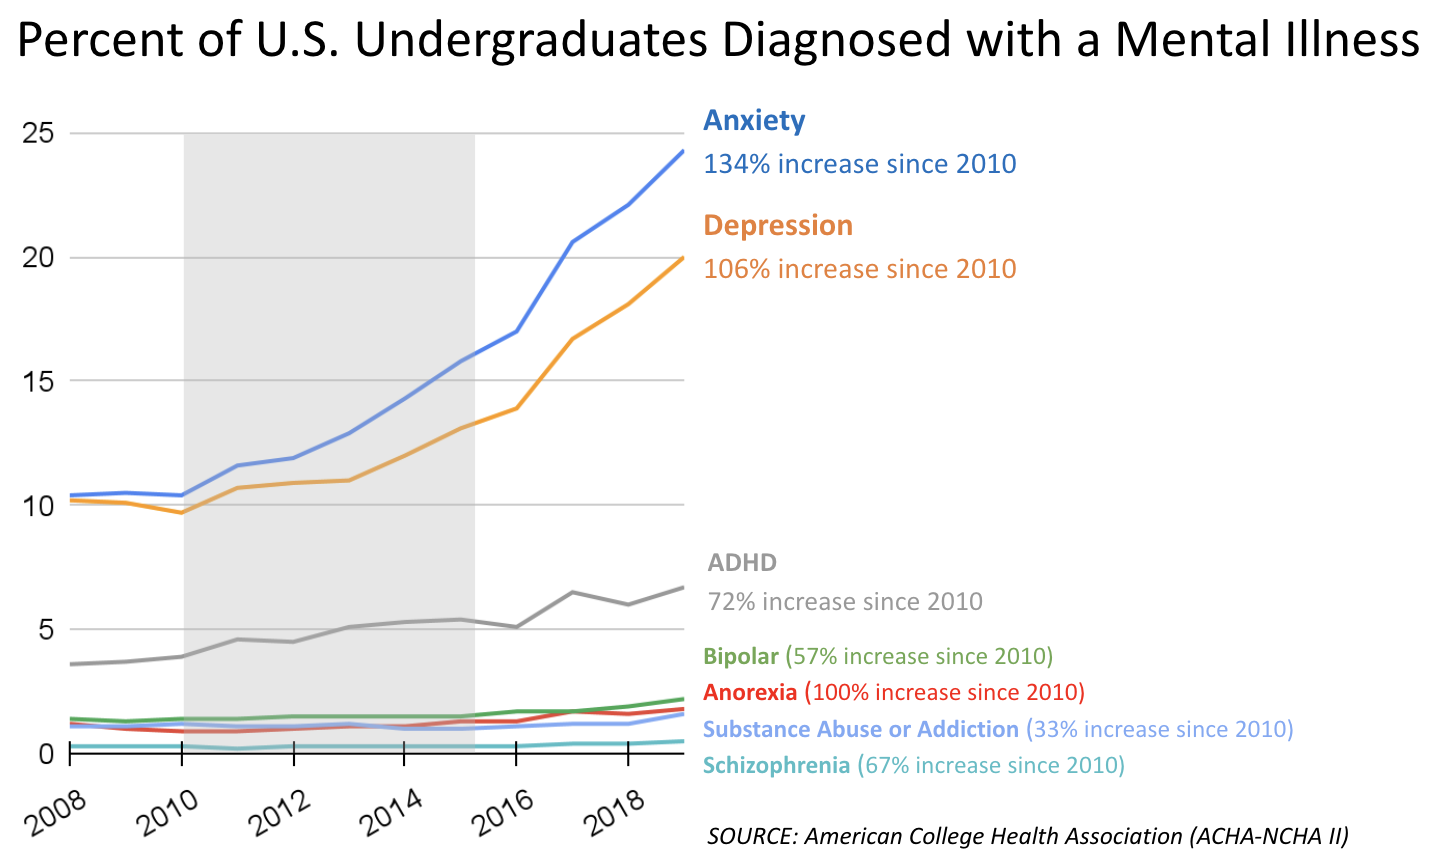 Percent of U.S. undergraduates with different mental illness, 2008-2019